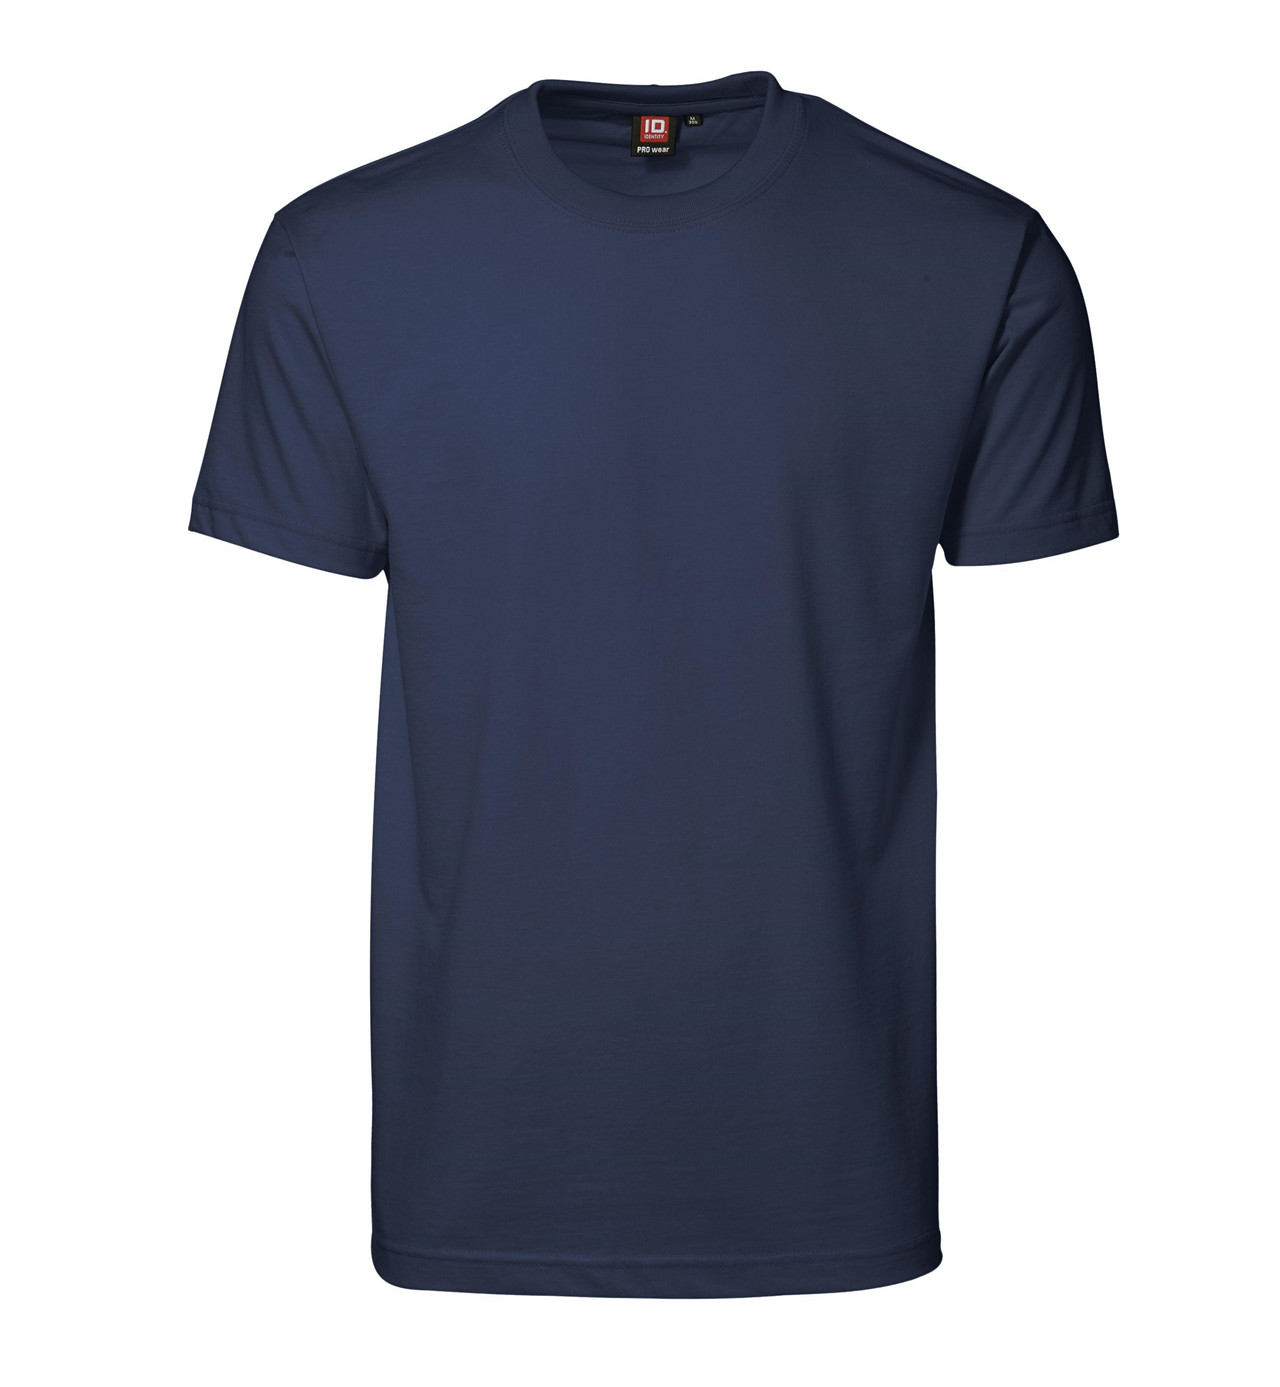 ID PRO Wear T-shirt til Herre (Navy, M)